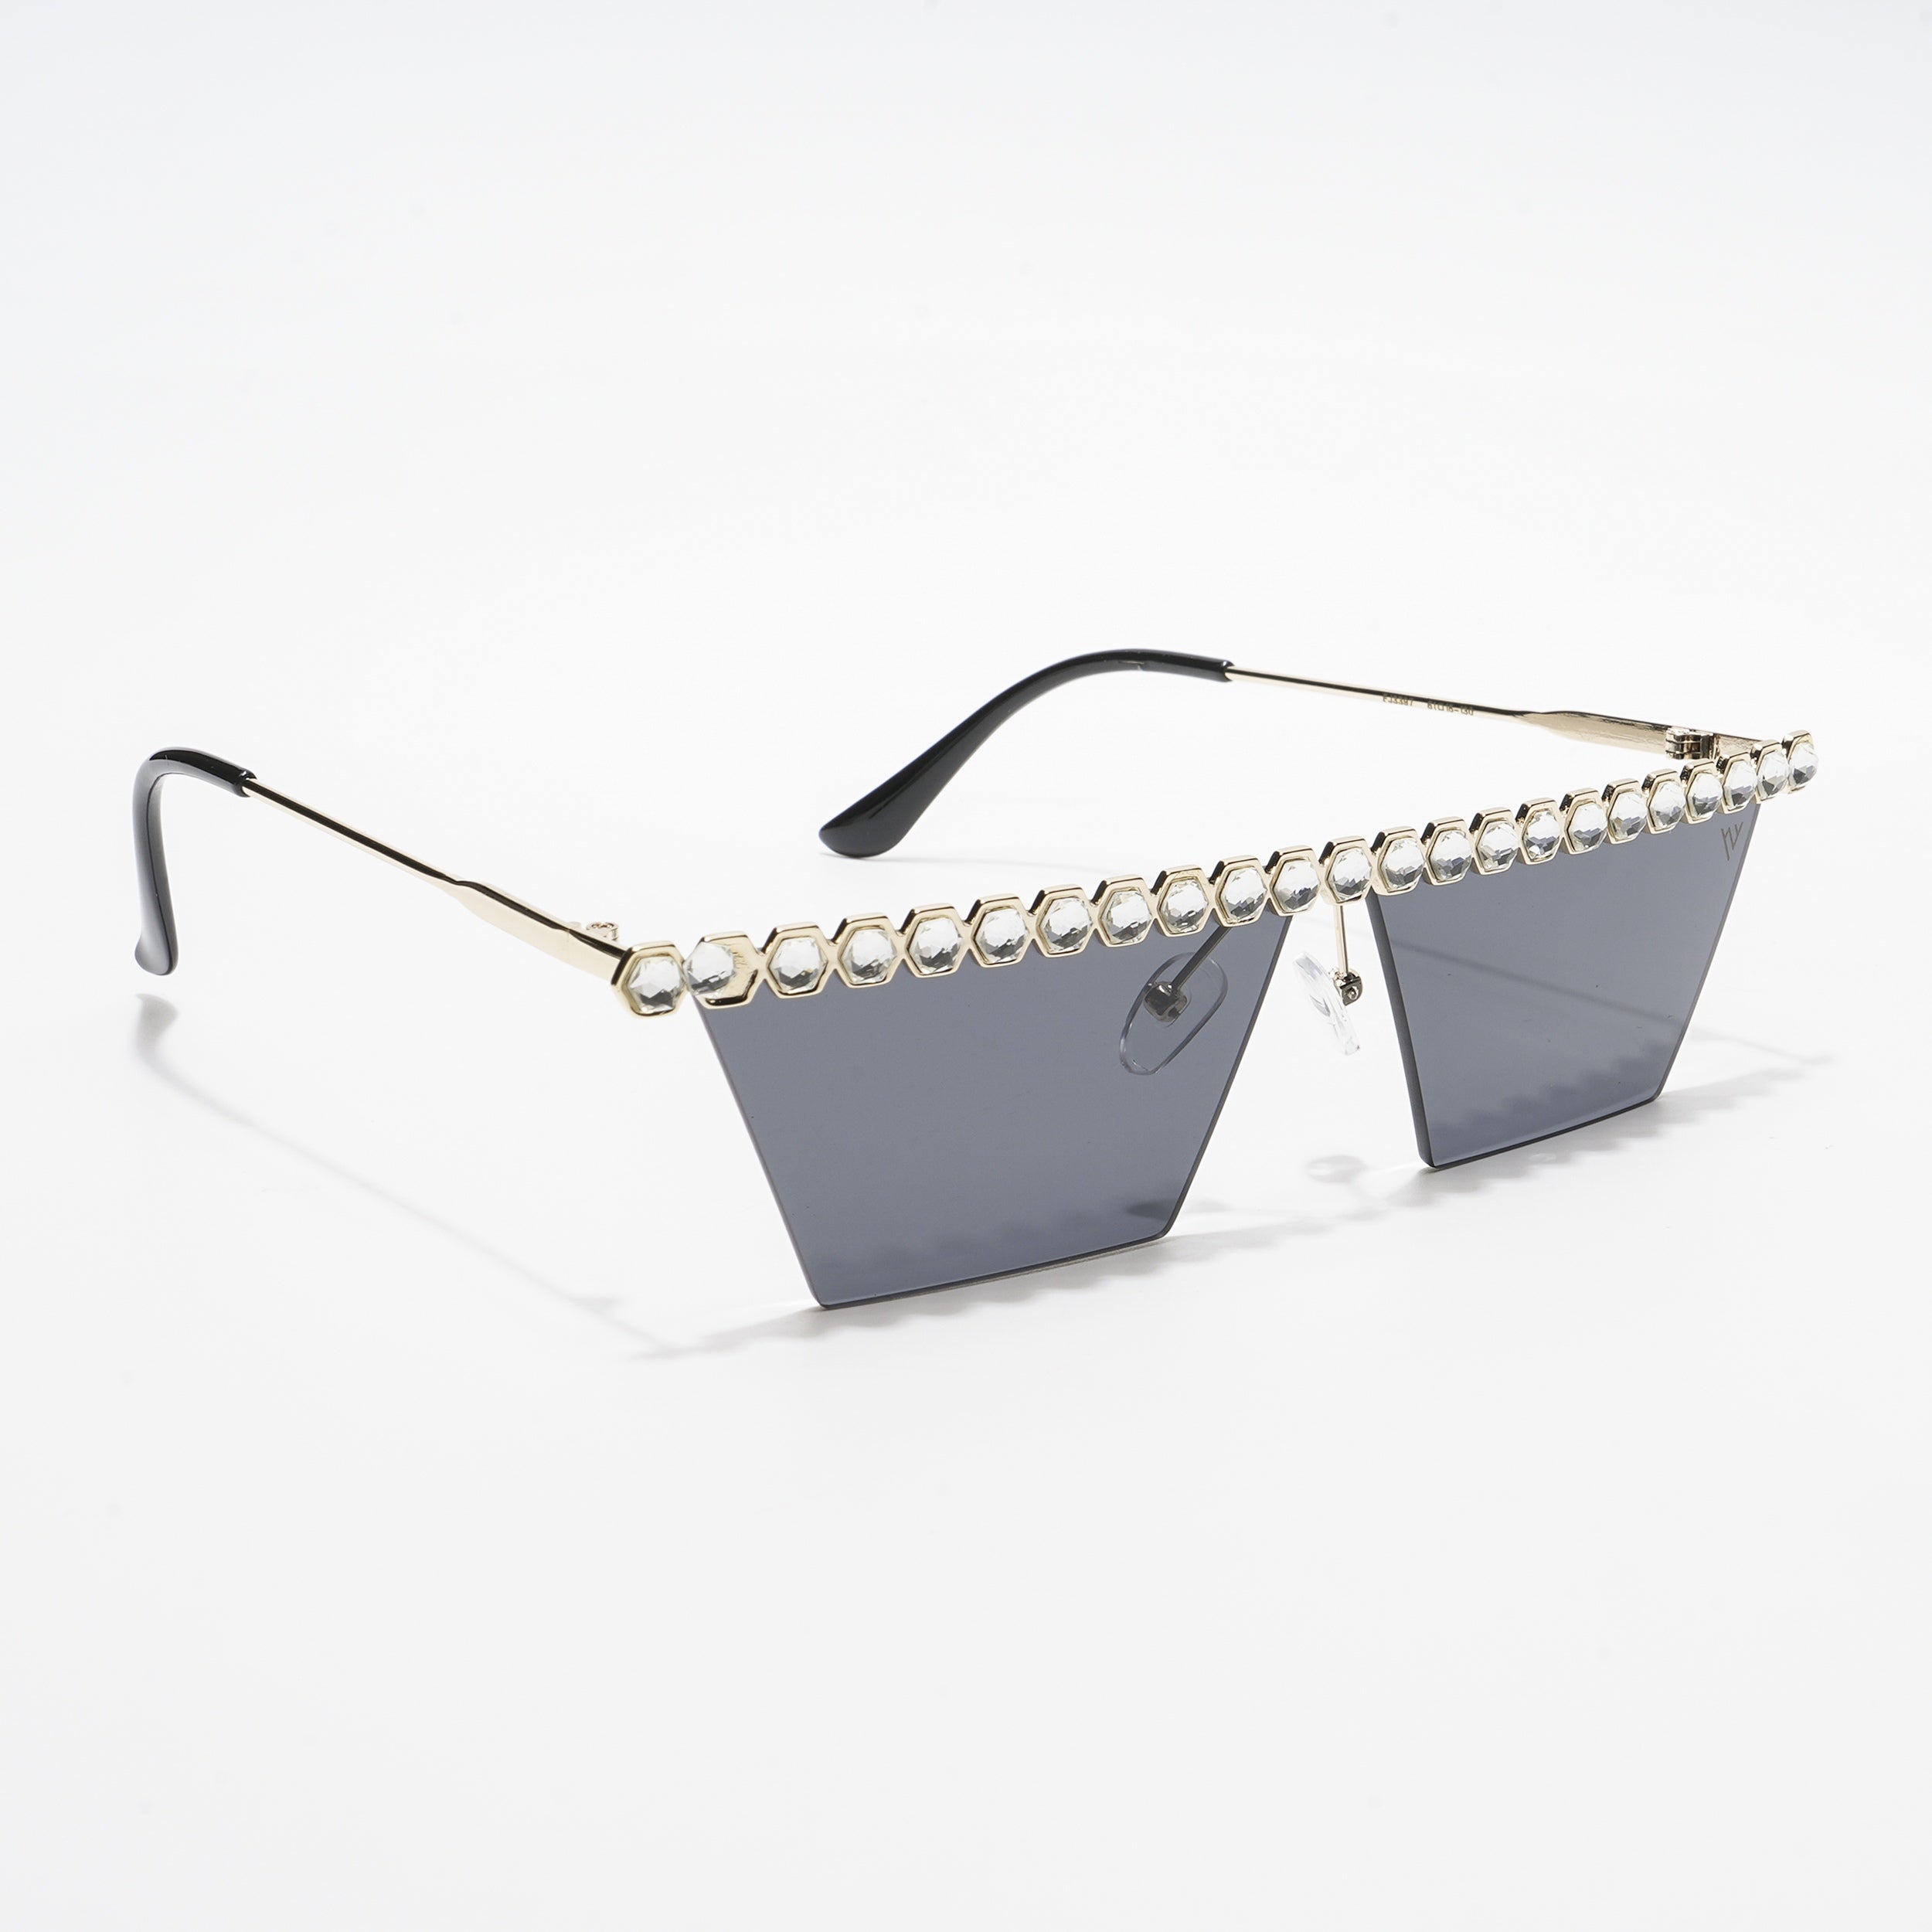 Voyage Unique Design Golden Cateye Sunglasses (3397MG3886)